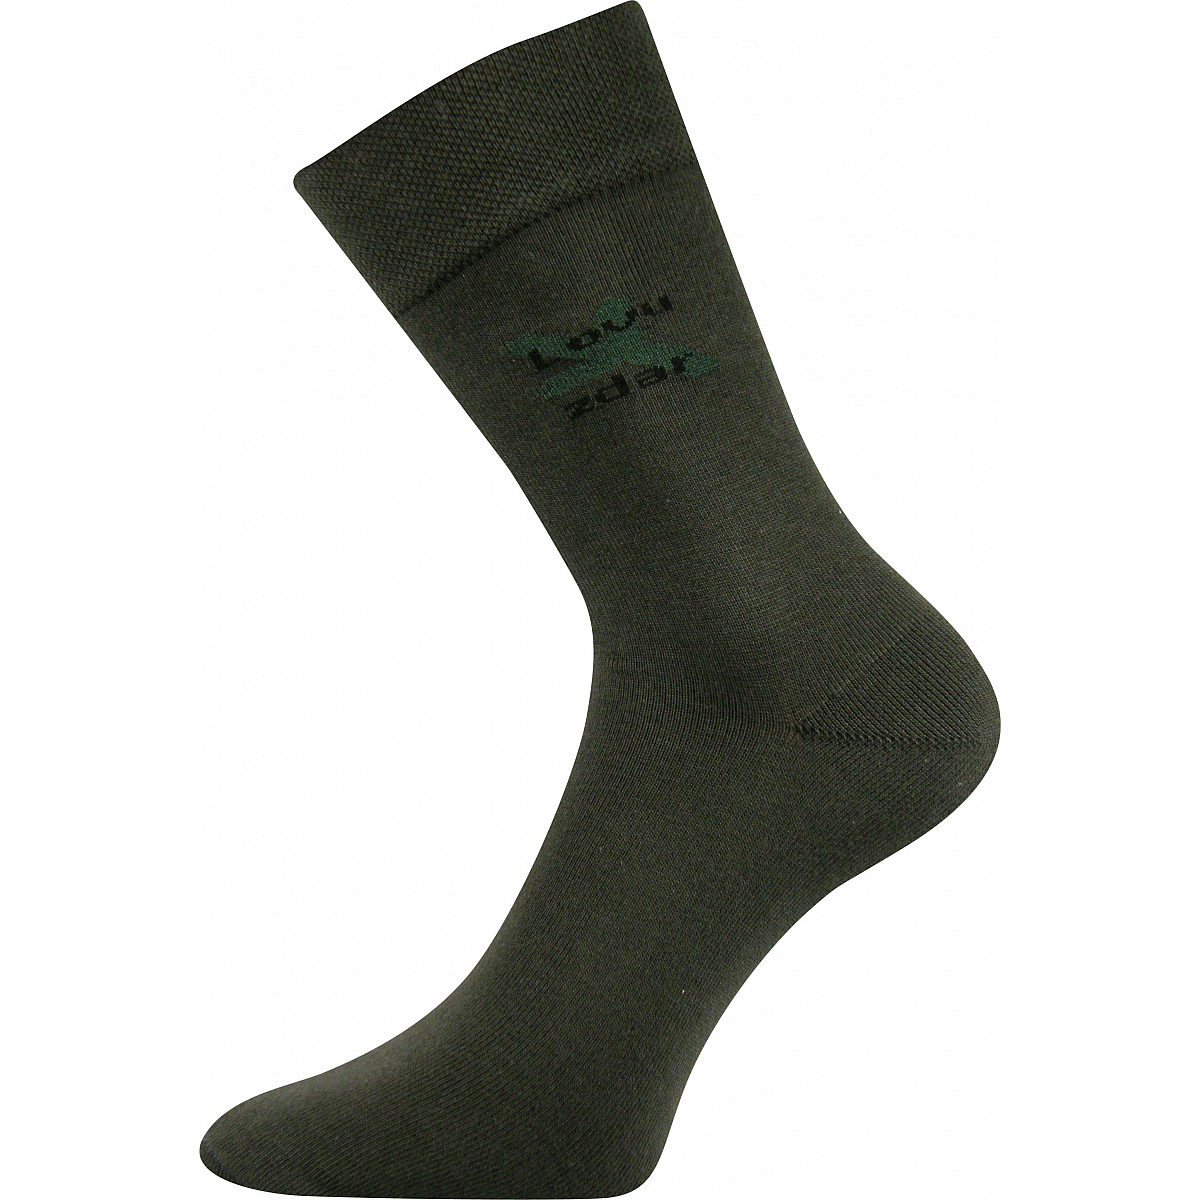 Lovecké ponožky Voxx Lassy Lovu zdar - olivové, 43-46